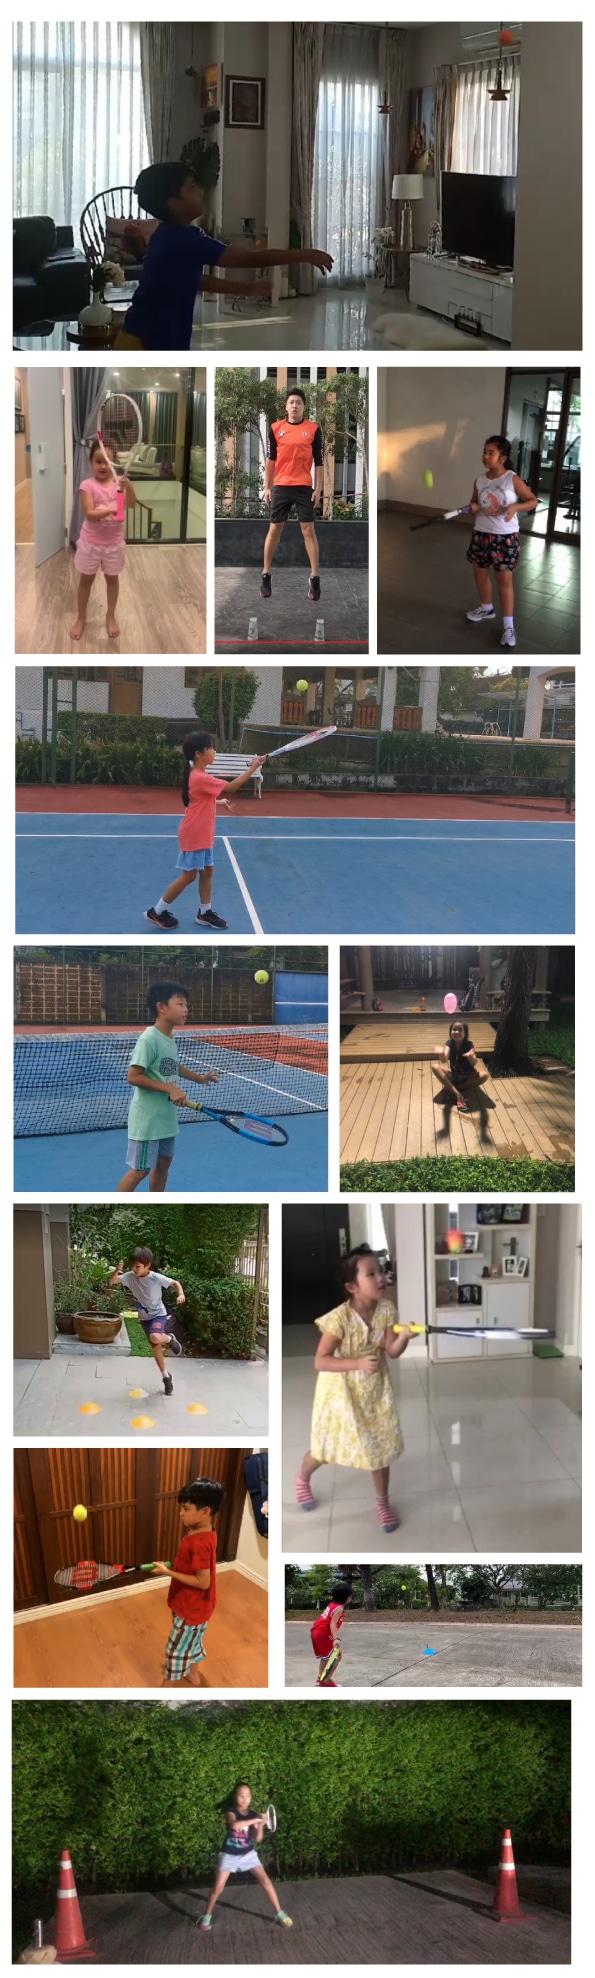 Tennis Academy challenges